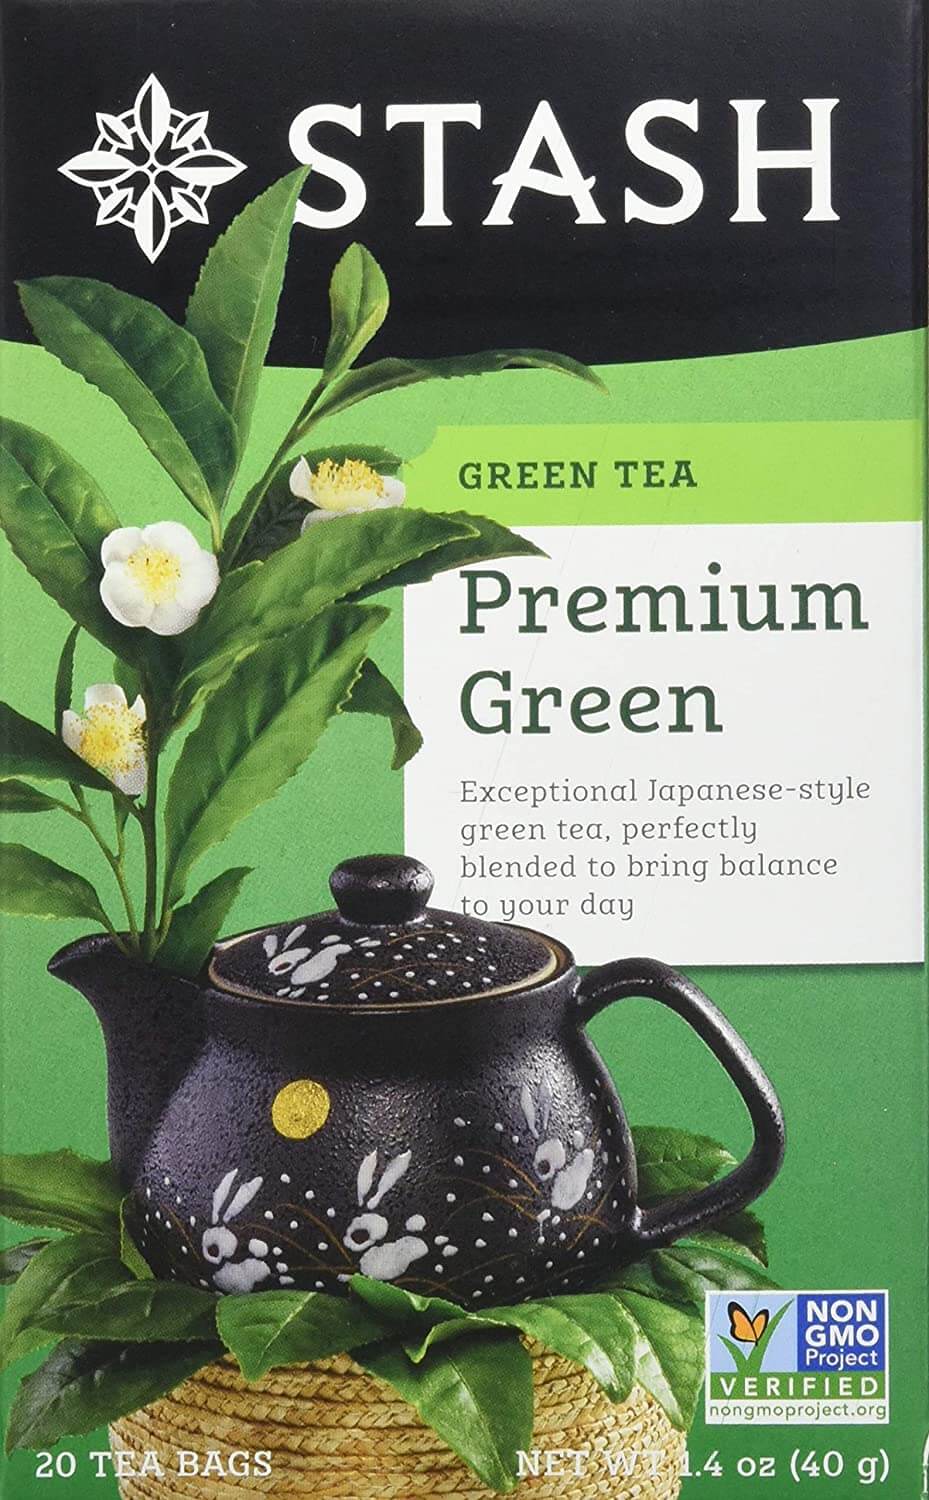 Stash Tea - Premium Green Tea